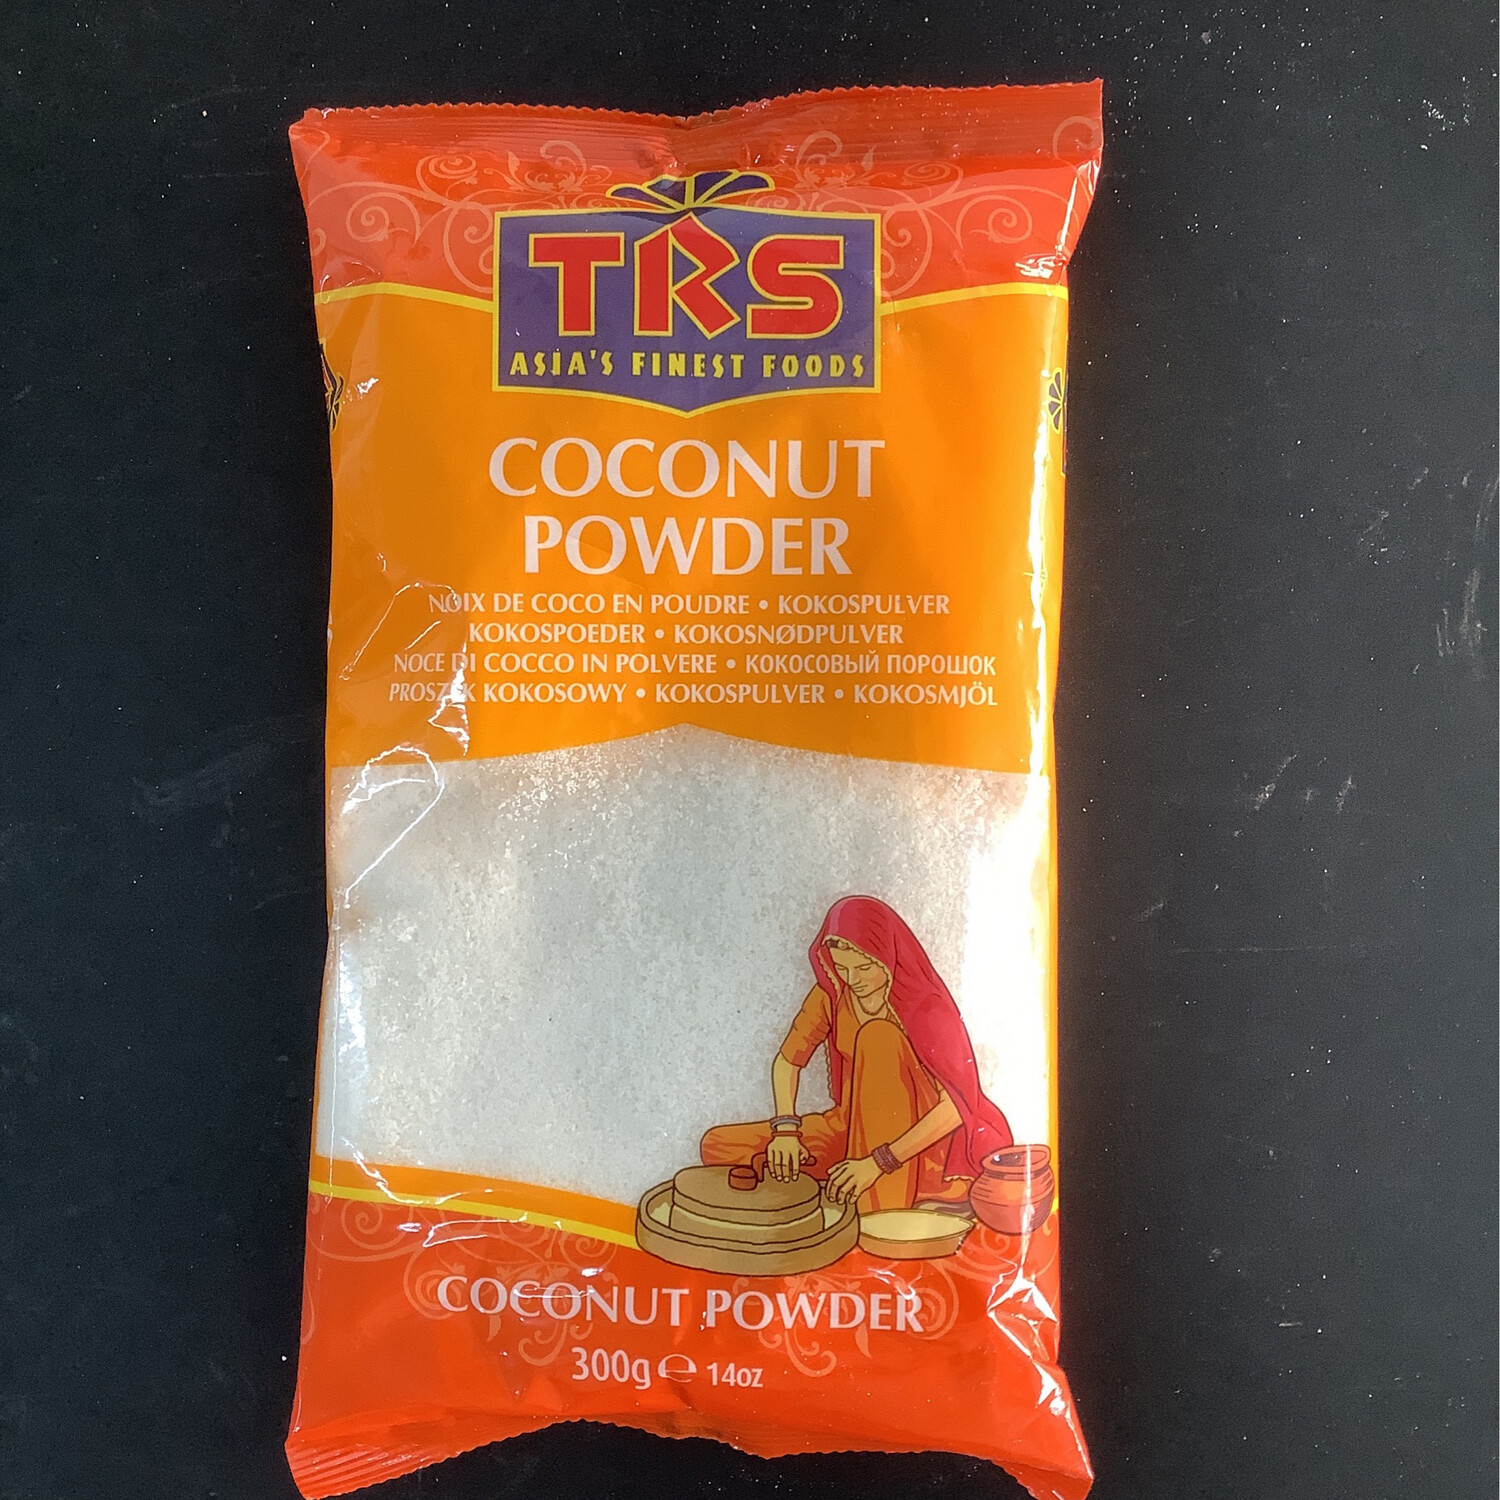 Trs Coconut powder 300g